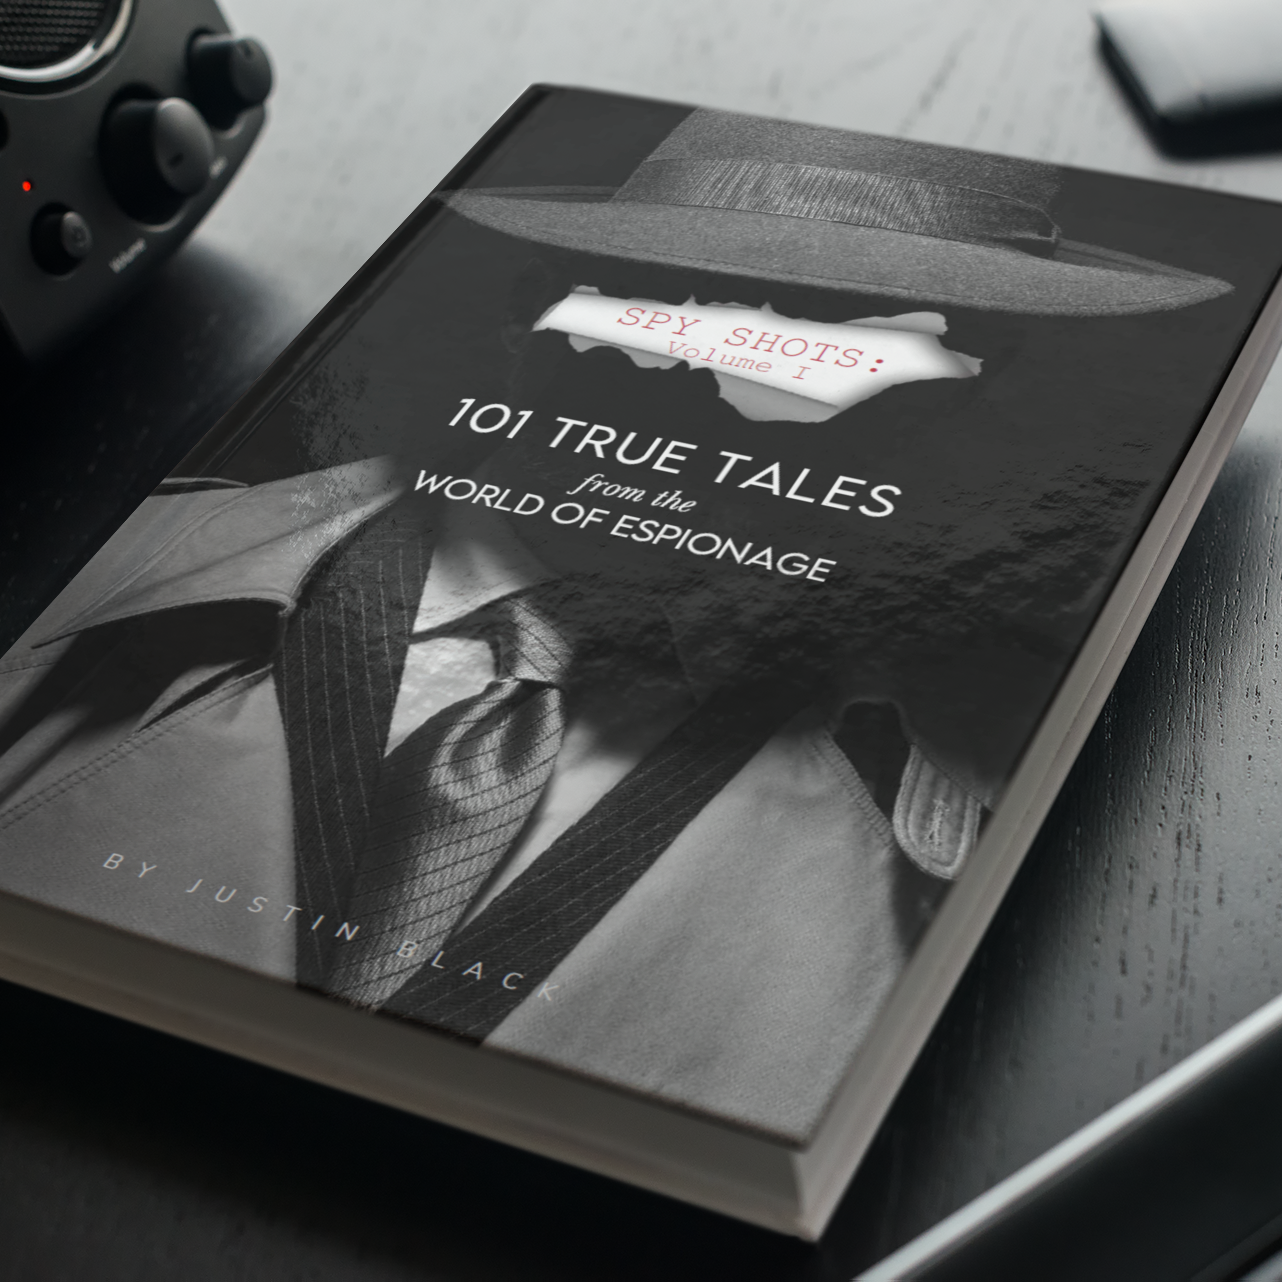 eBook - Spy Shots Volume I - 101 True Tales of Espionage